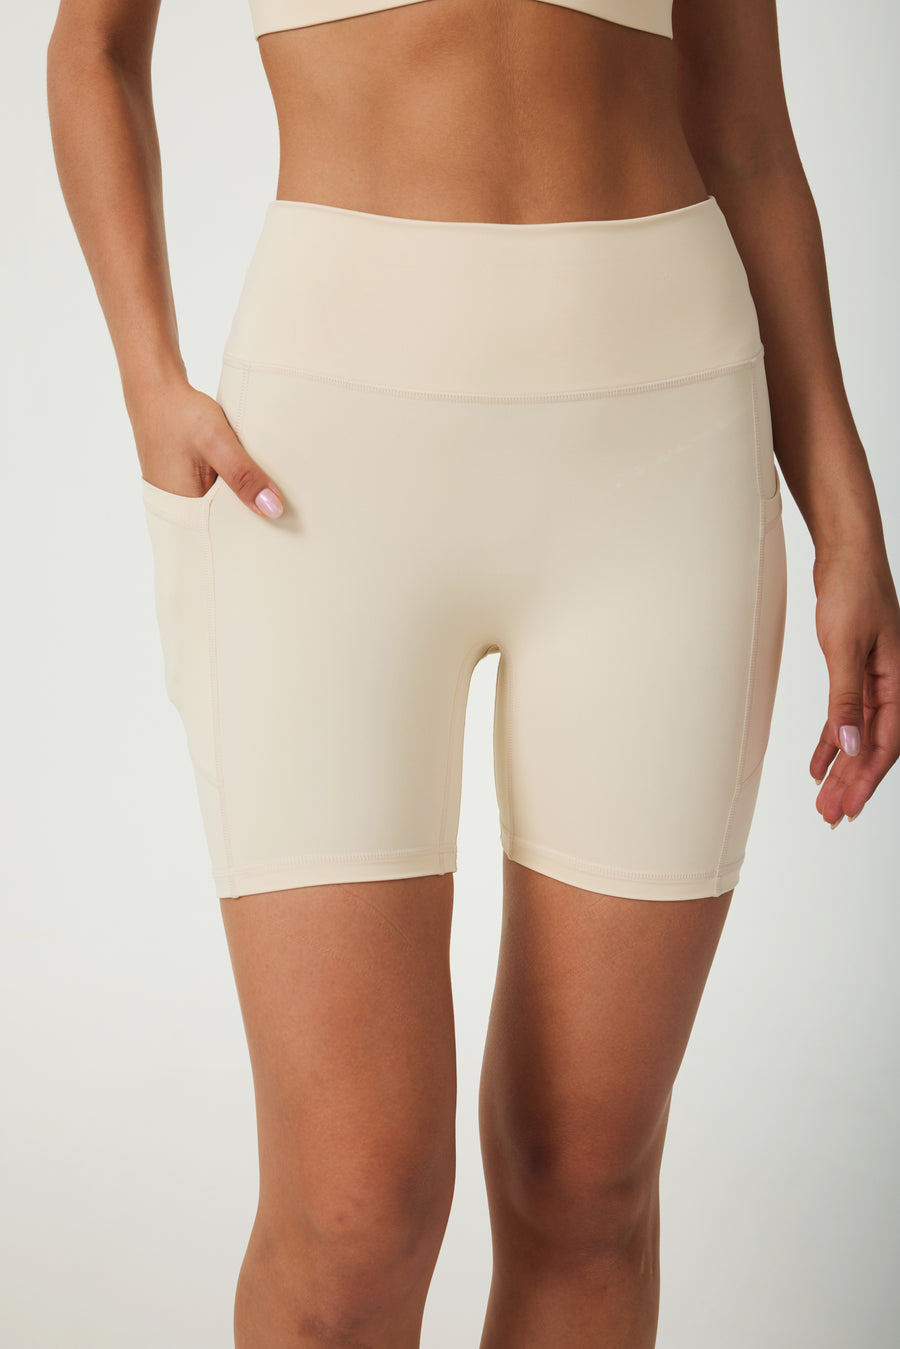 ButterySoft High-waisted bike shorts- Ivory White